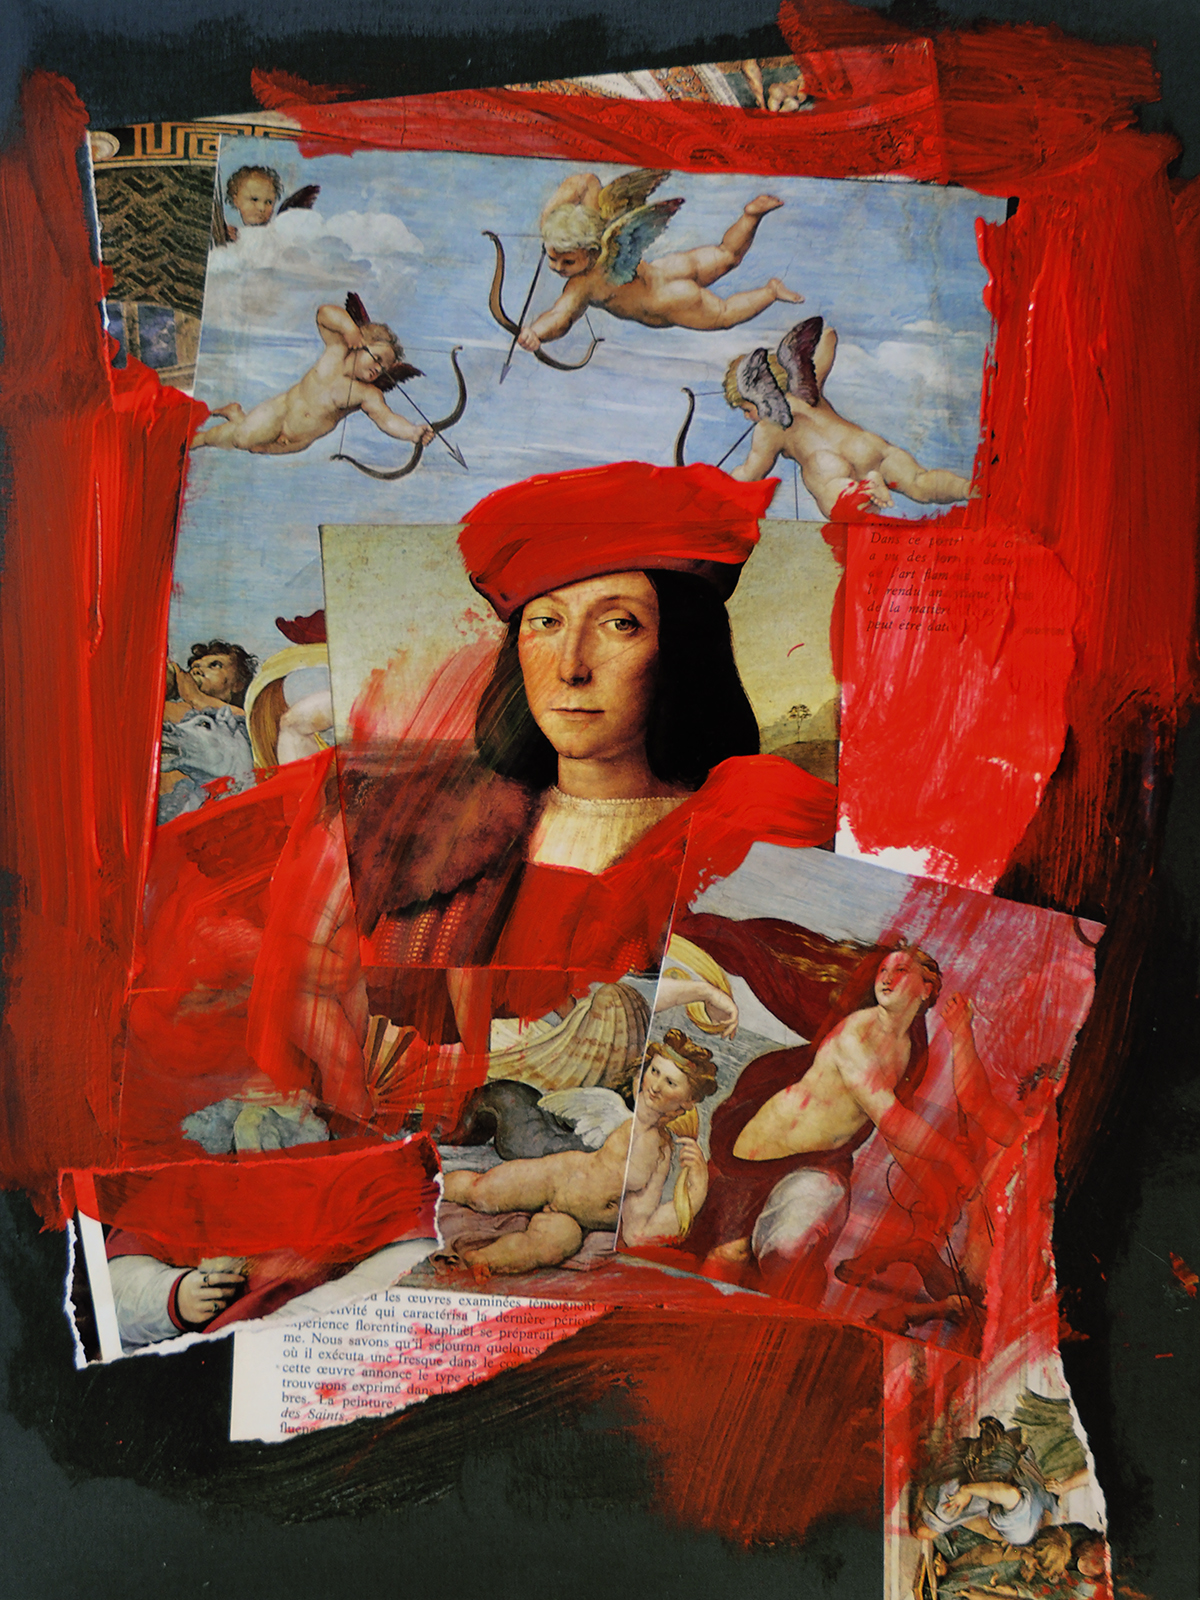 Boy with red hat Raphaël homage collage LR